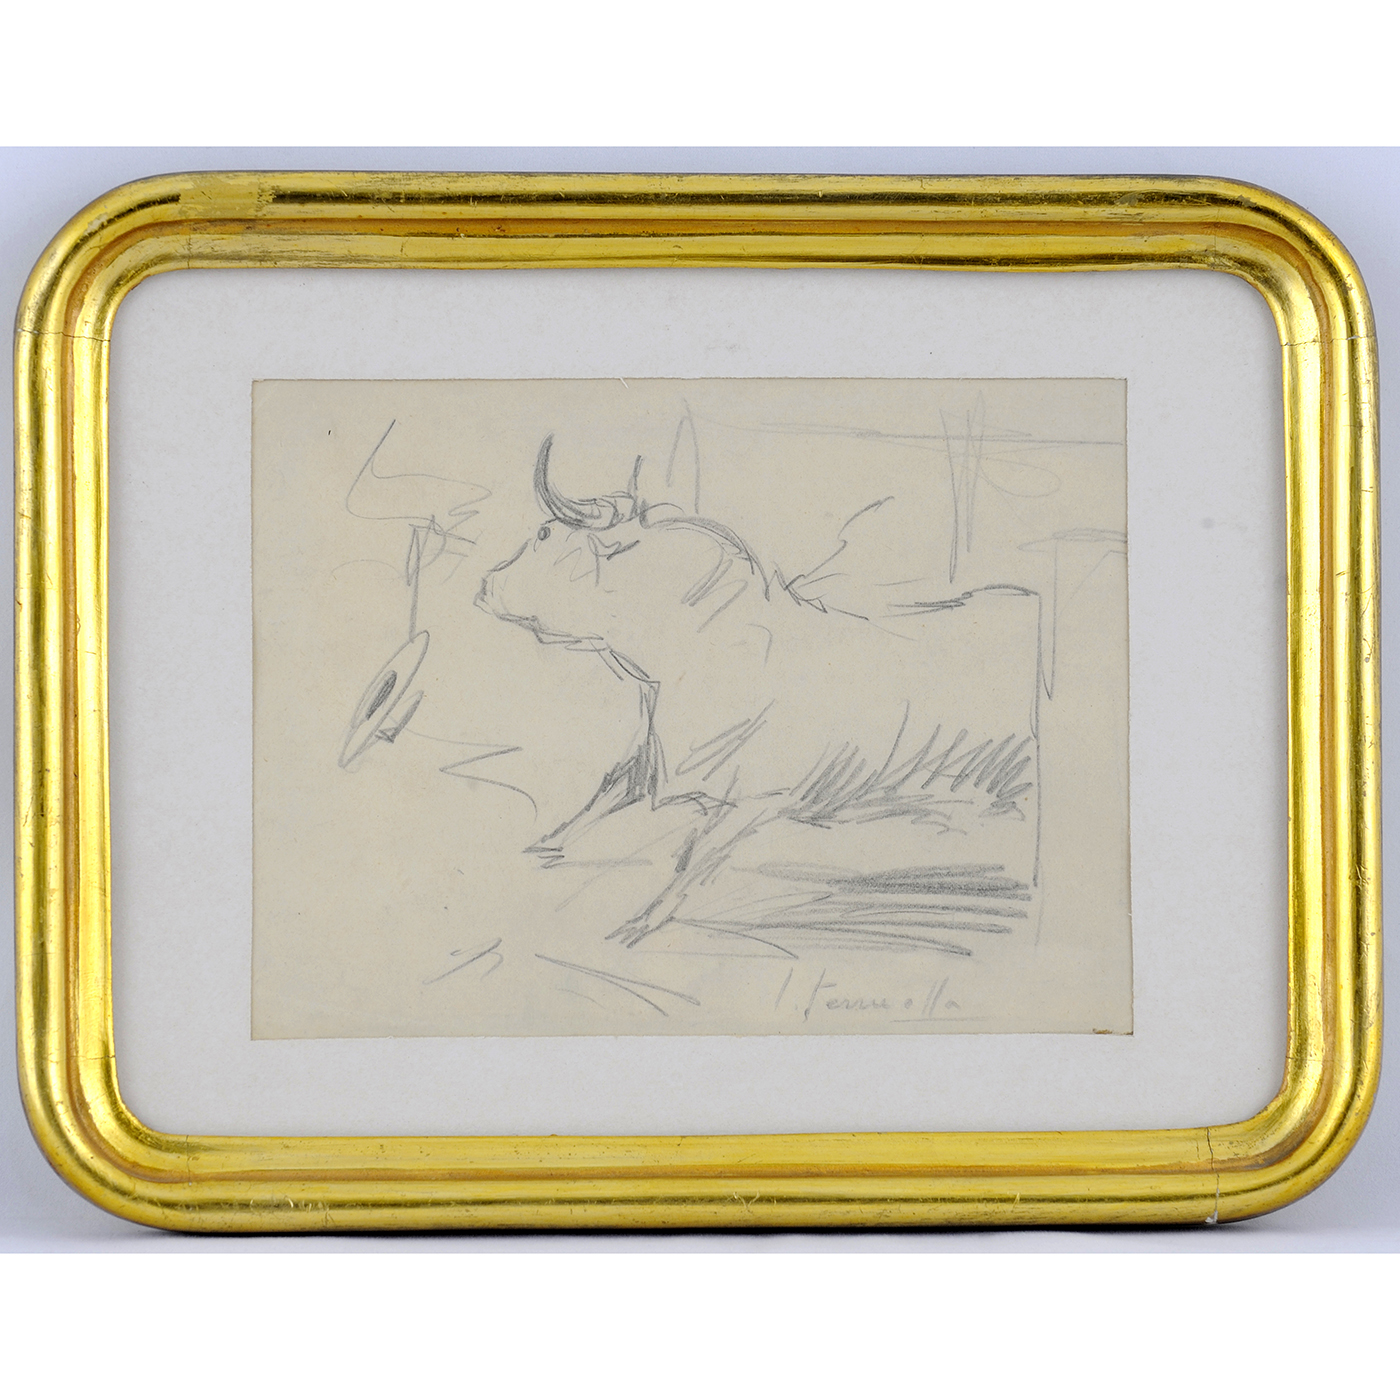 JOAQUÍN TERRUELLA MATILLA. Pencil drawing. "" Bullfighting scene "